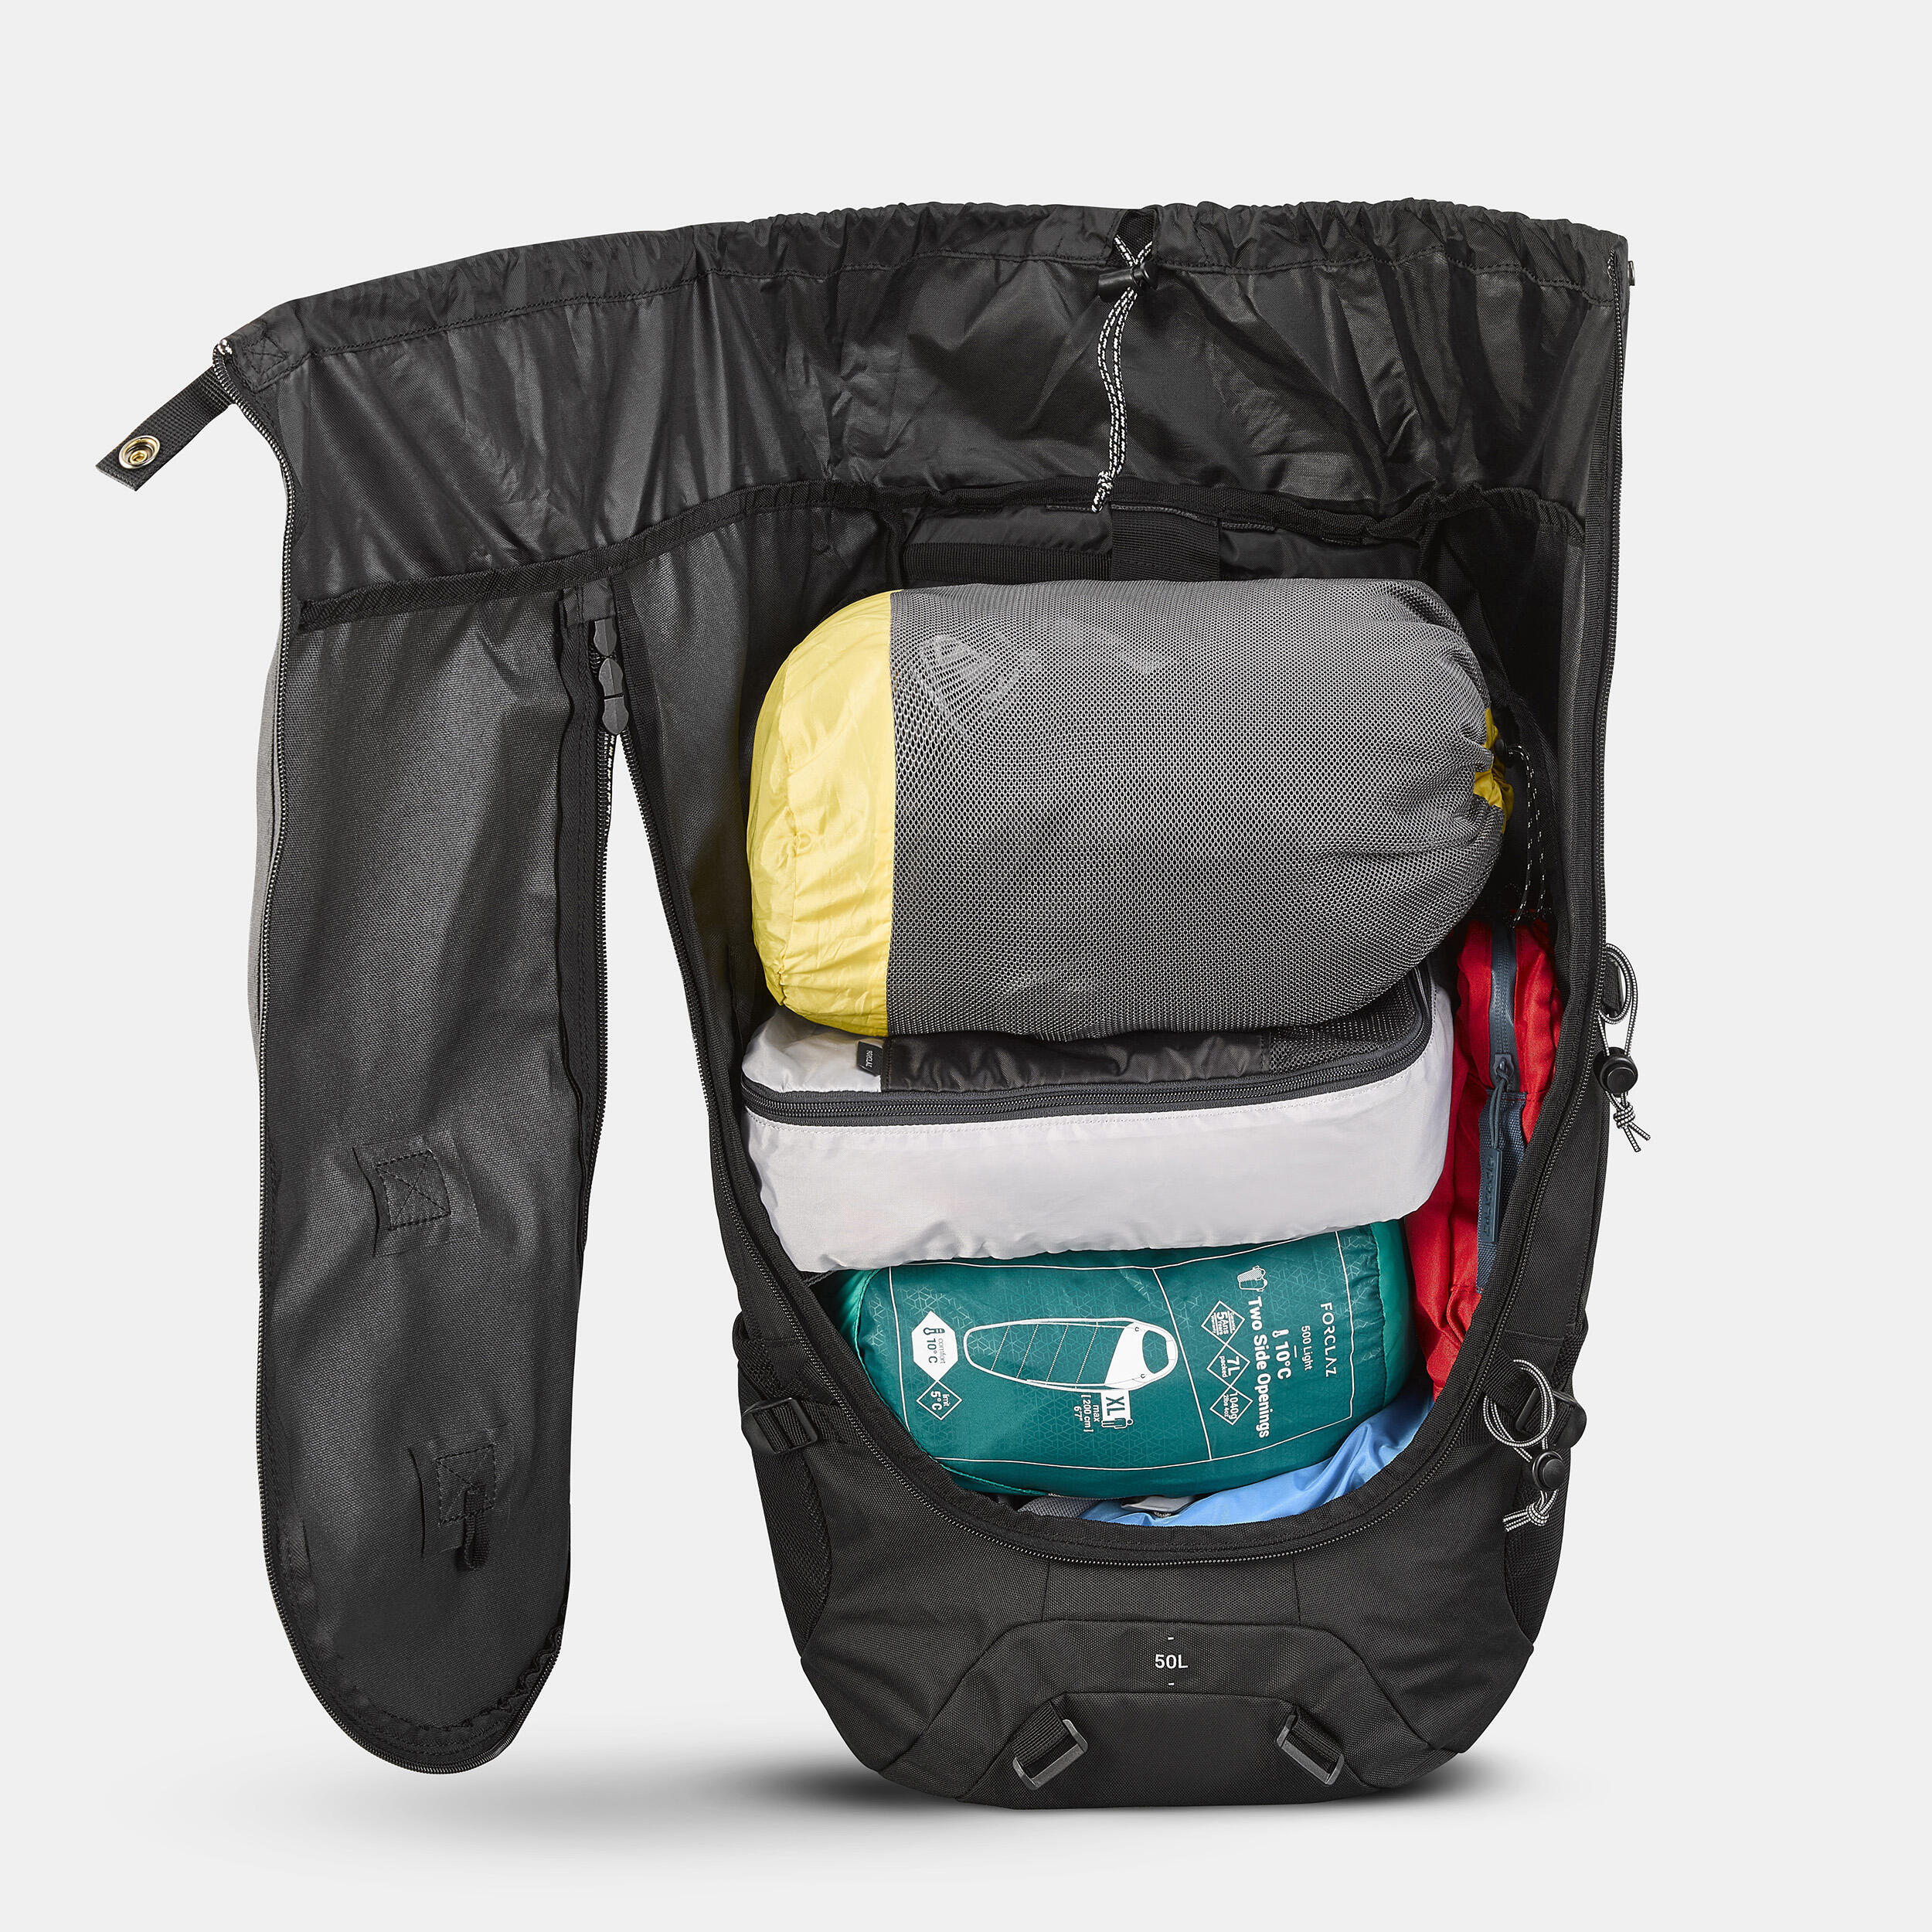 Travel backpack 50L - Travel 100 9/20